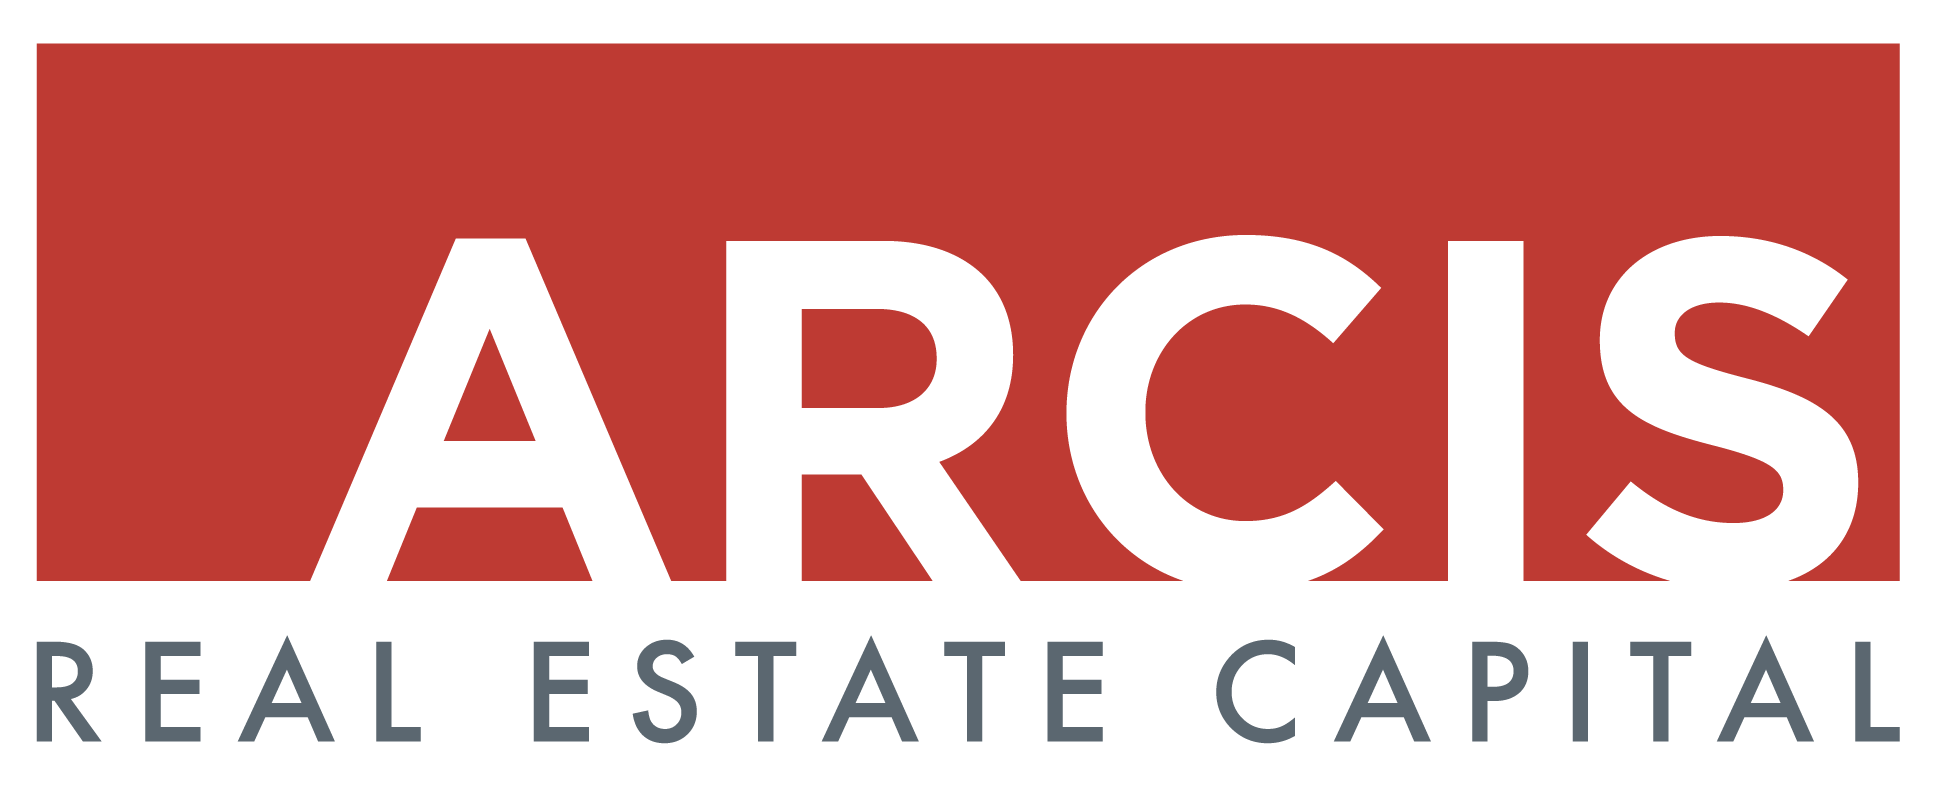 Arcis Real Estate Capital